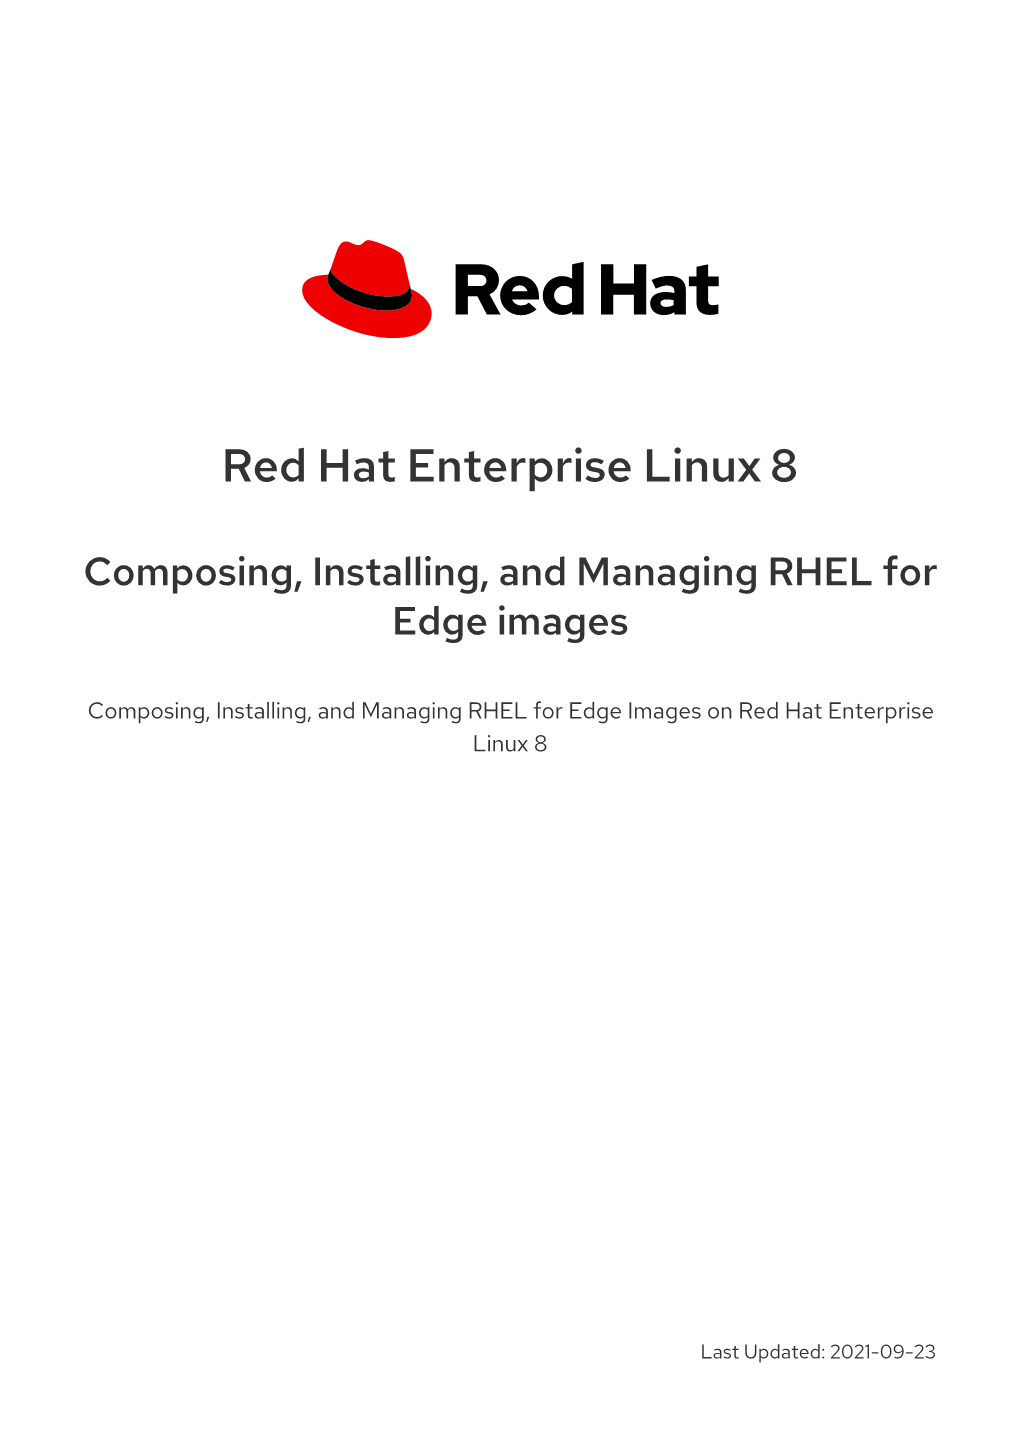 Red Hat Enterprise Linux 8 Composing, Installing, and Managing RHEL for Edge Images